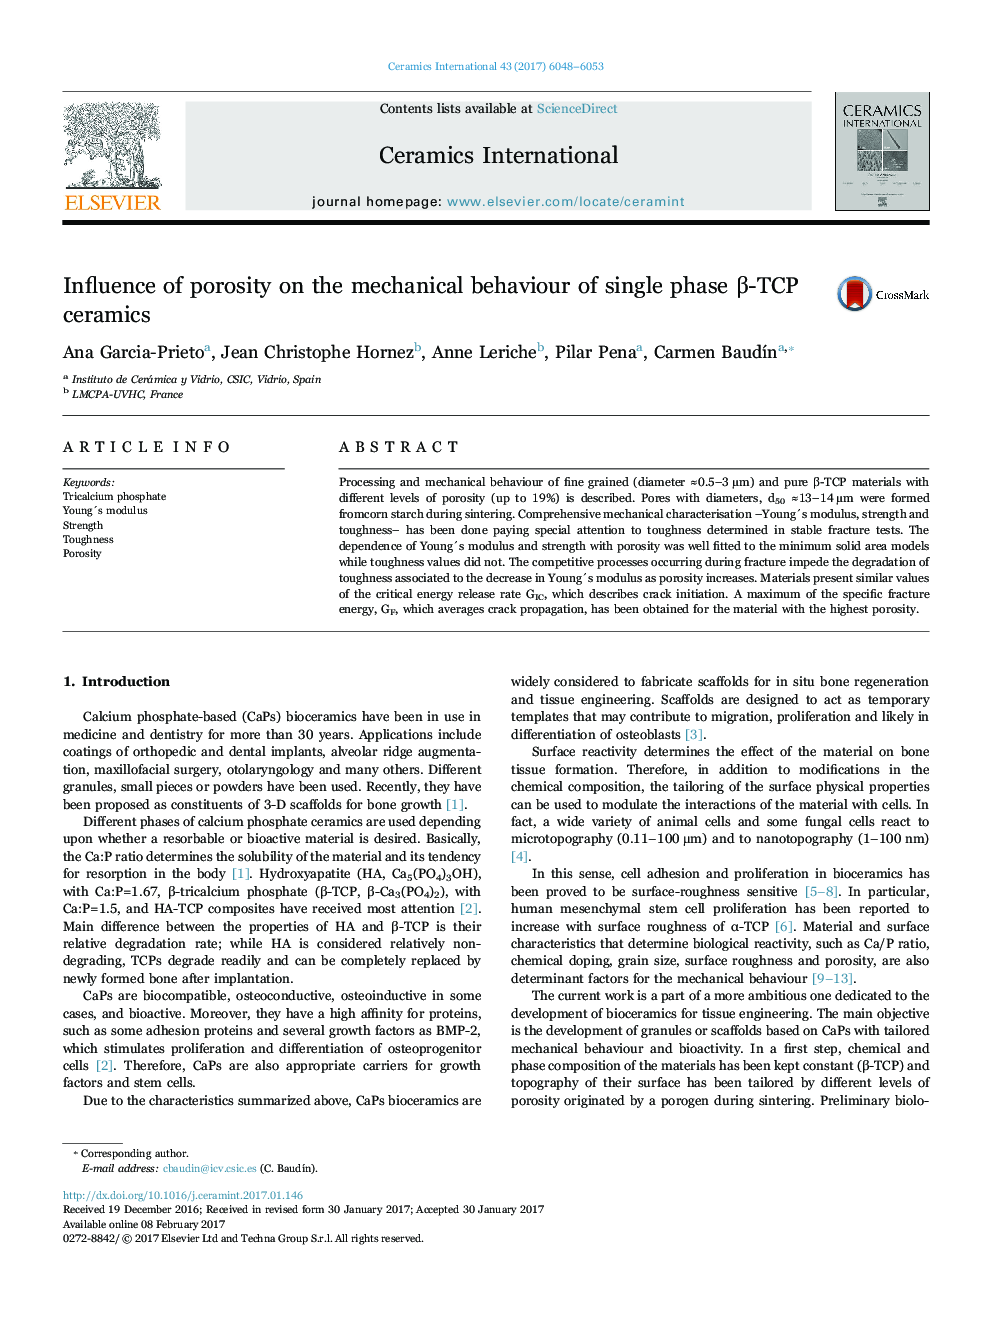 Influence of porosity on the mechanical behaviour of single phase Î²-TCP ceramics